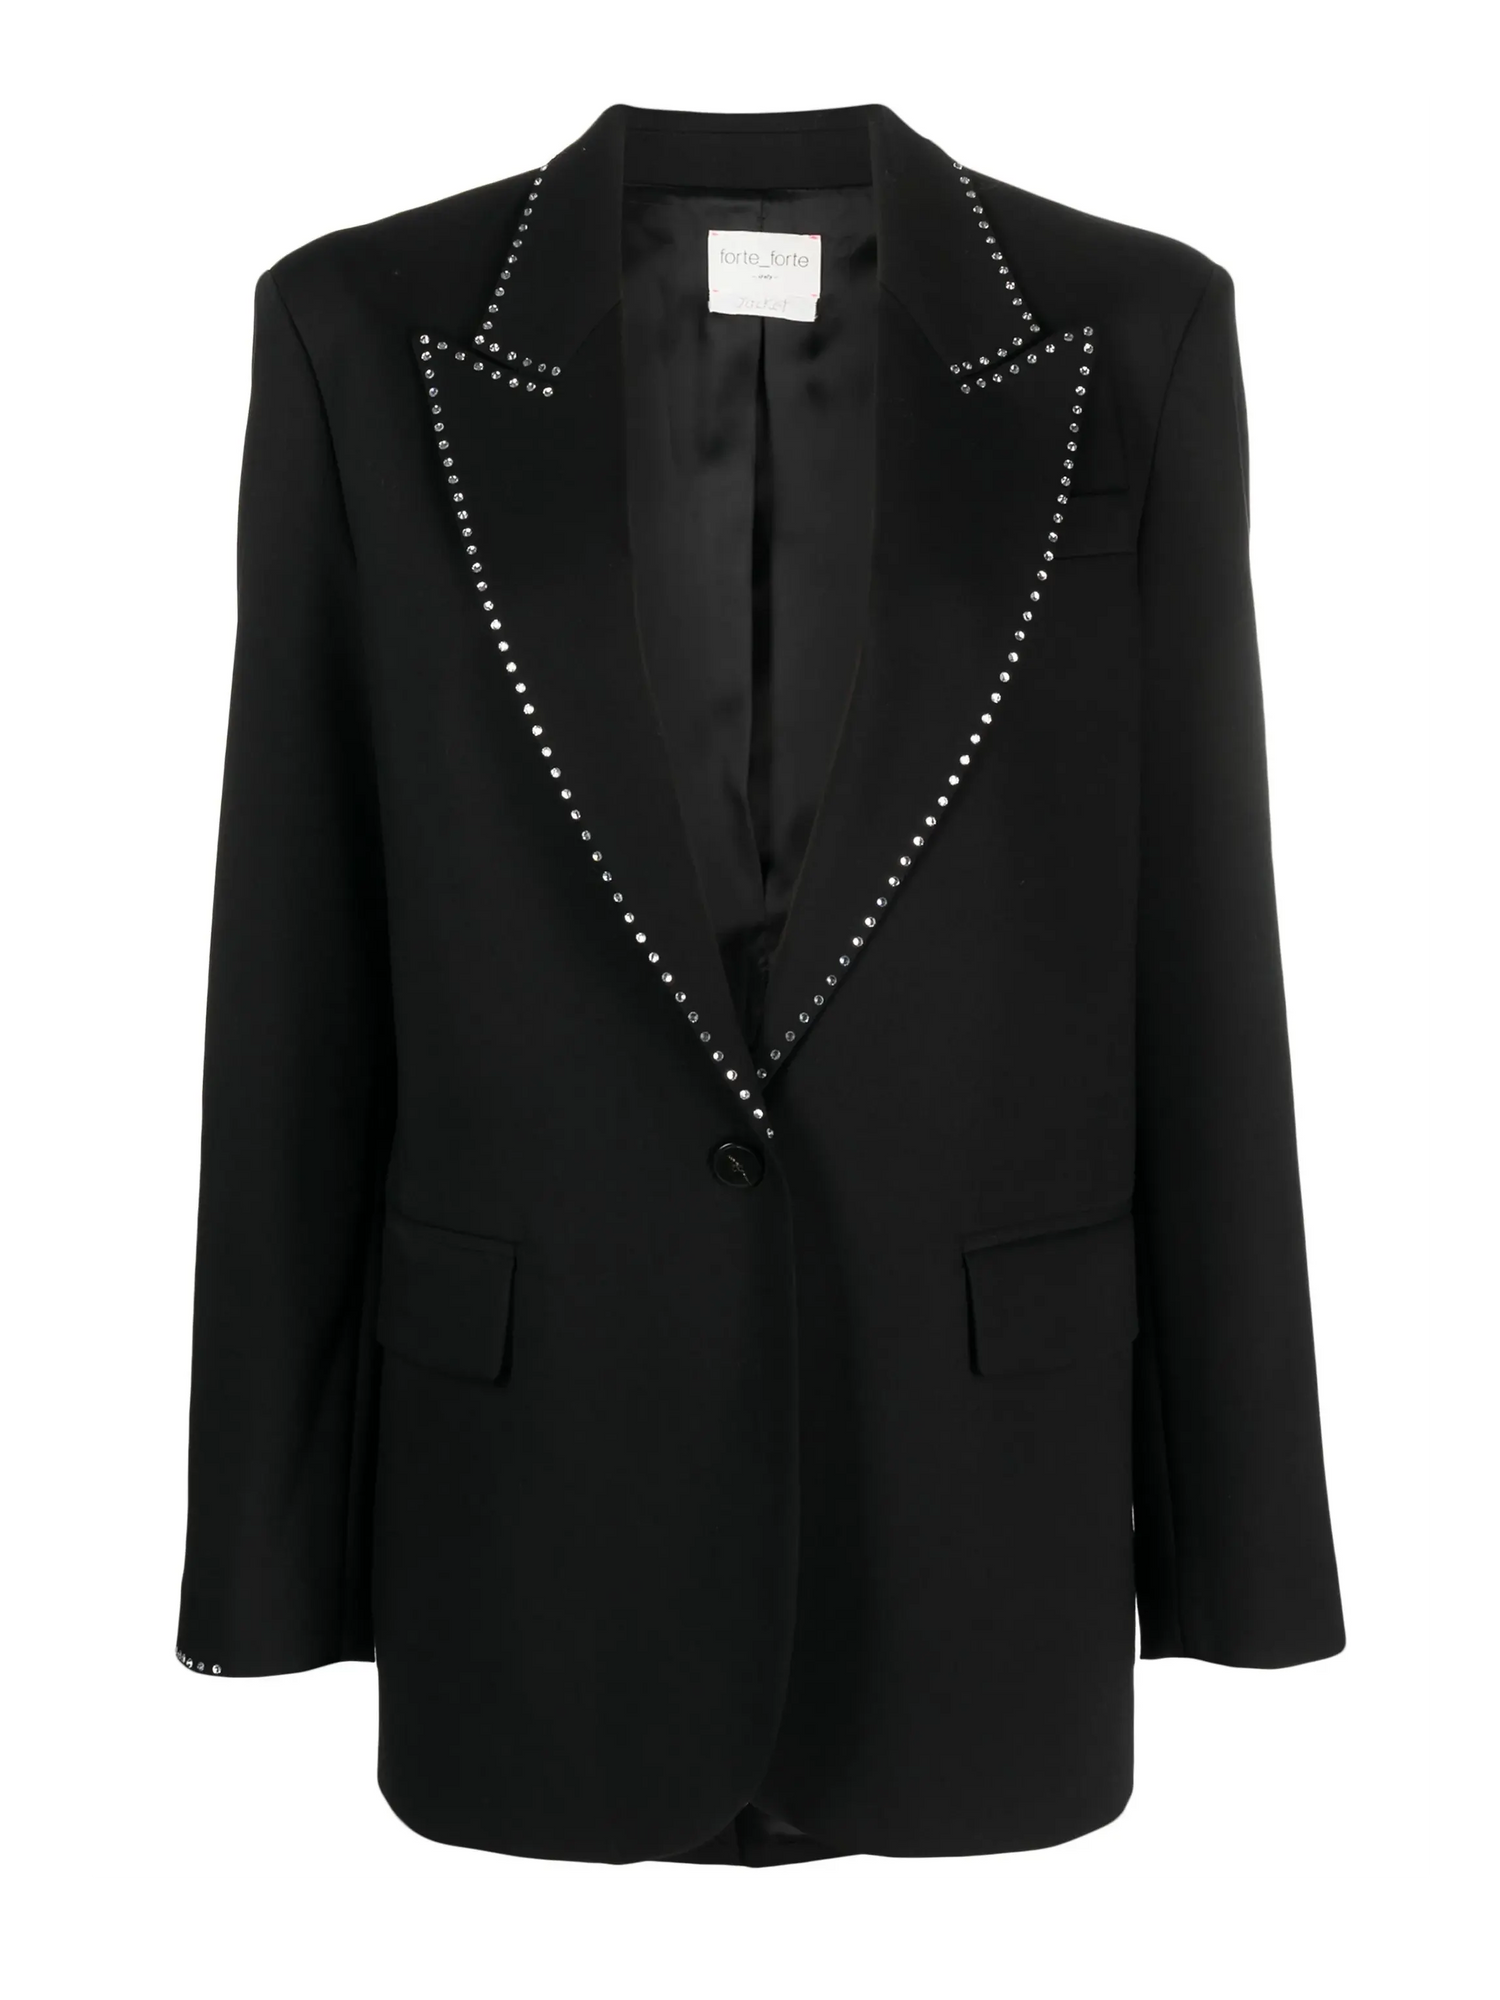 Strass wool viscose twill single-breasted jacket, black